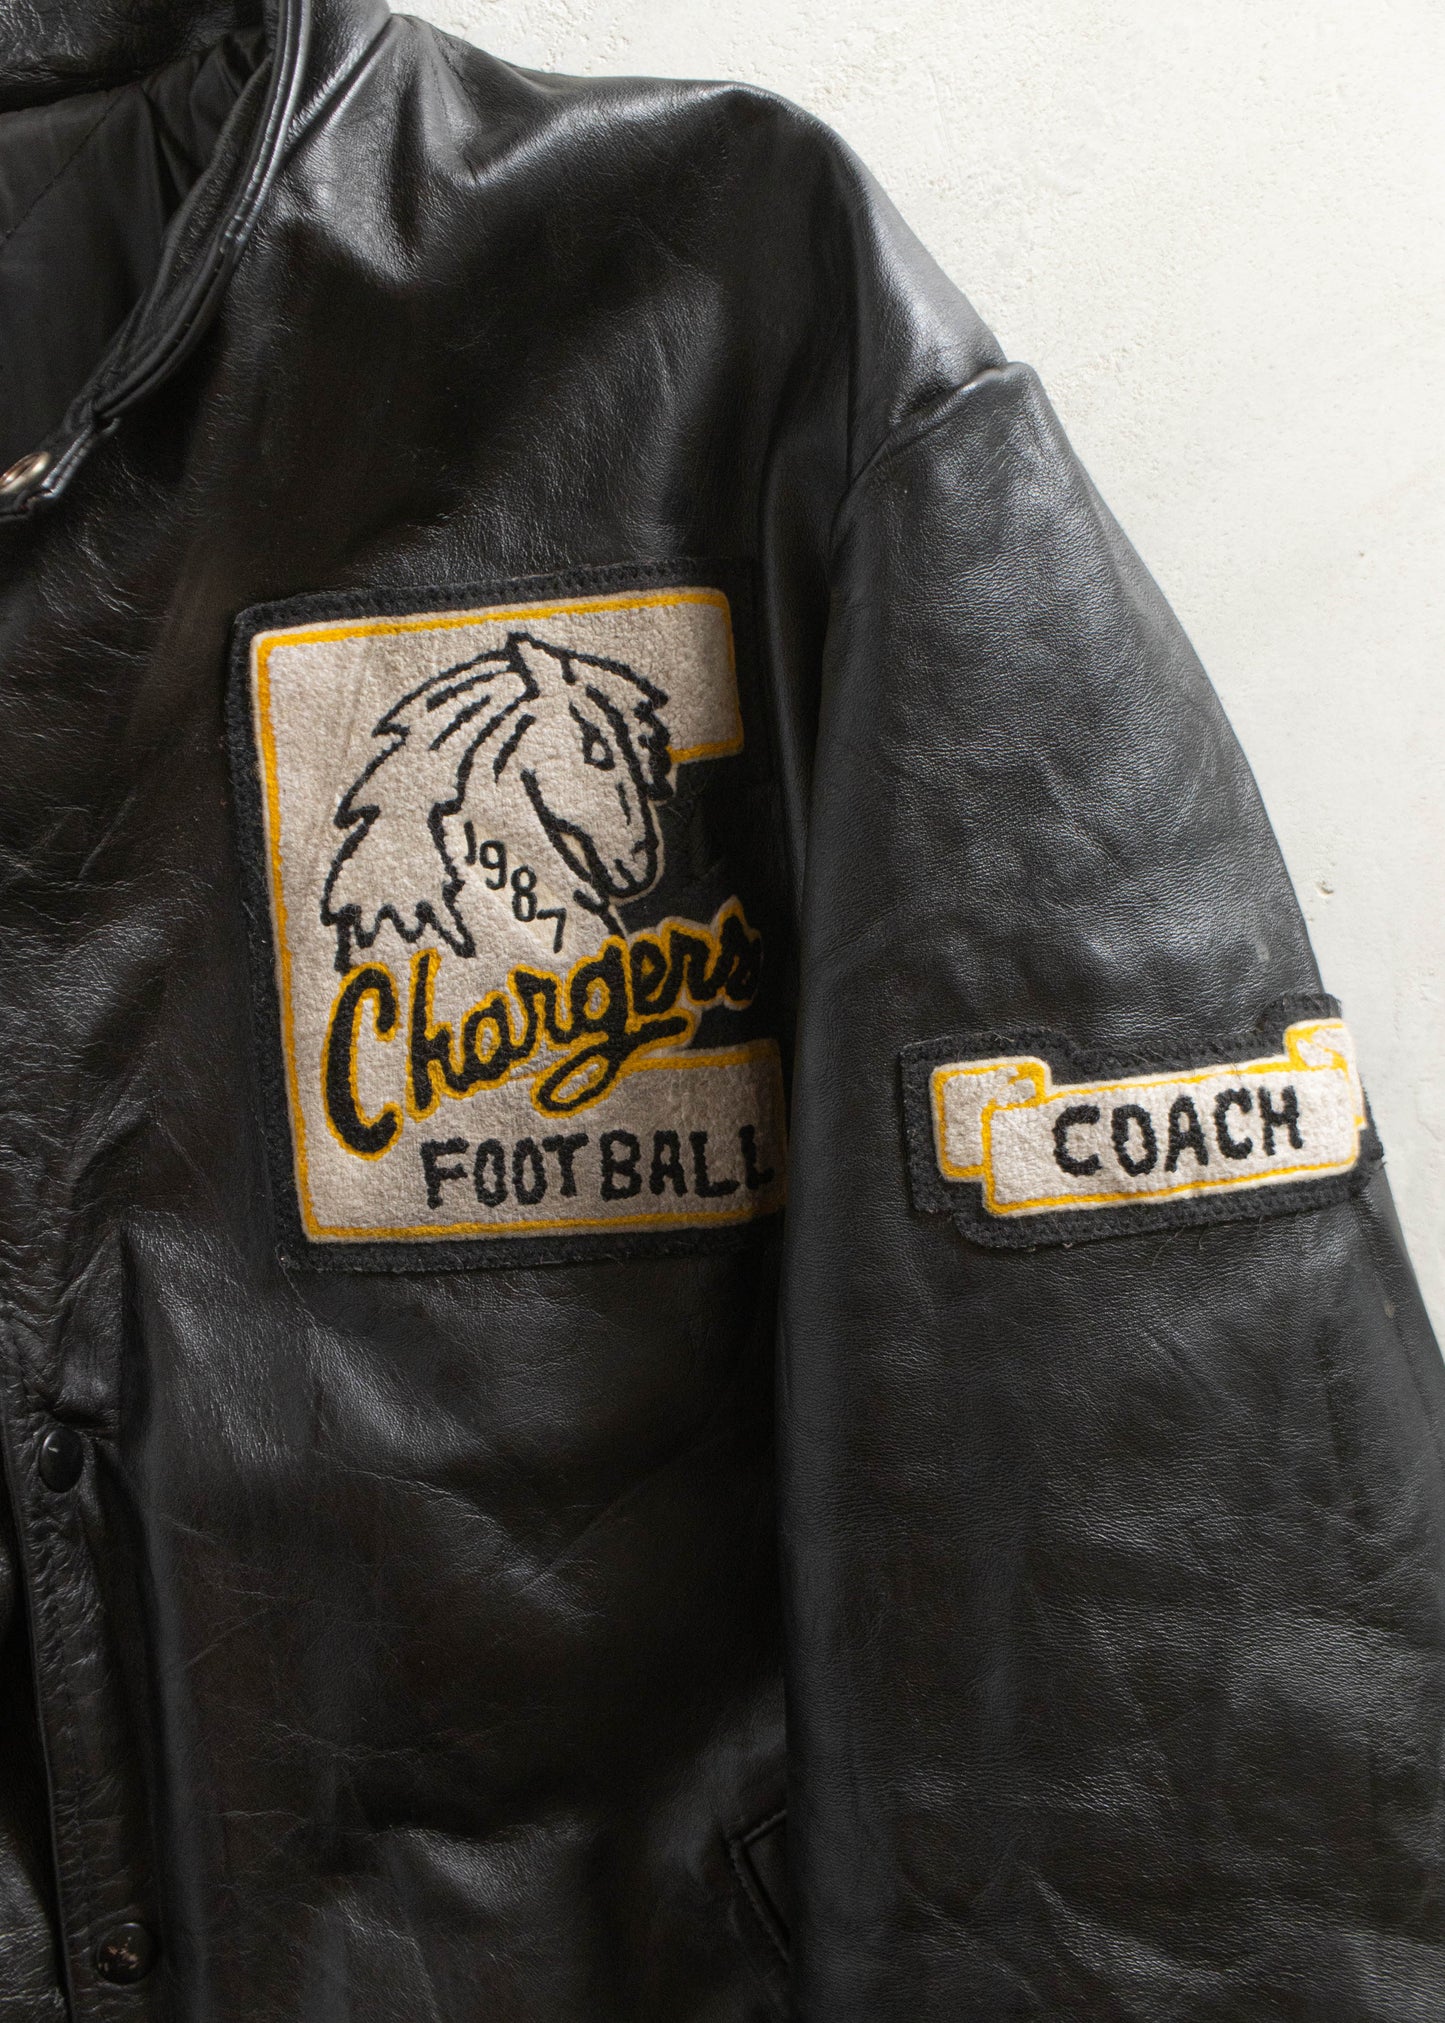 Vintage 1980s Chargers Football Varsity Letterman Leather Jacket Size L/XL